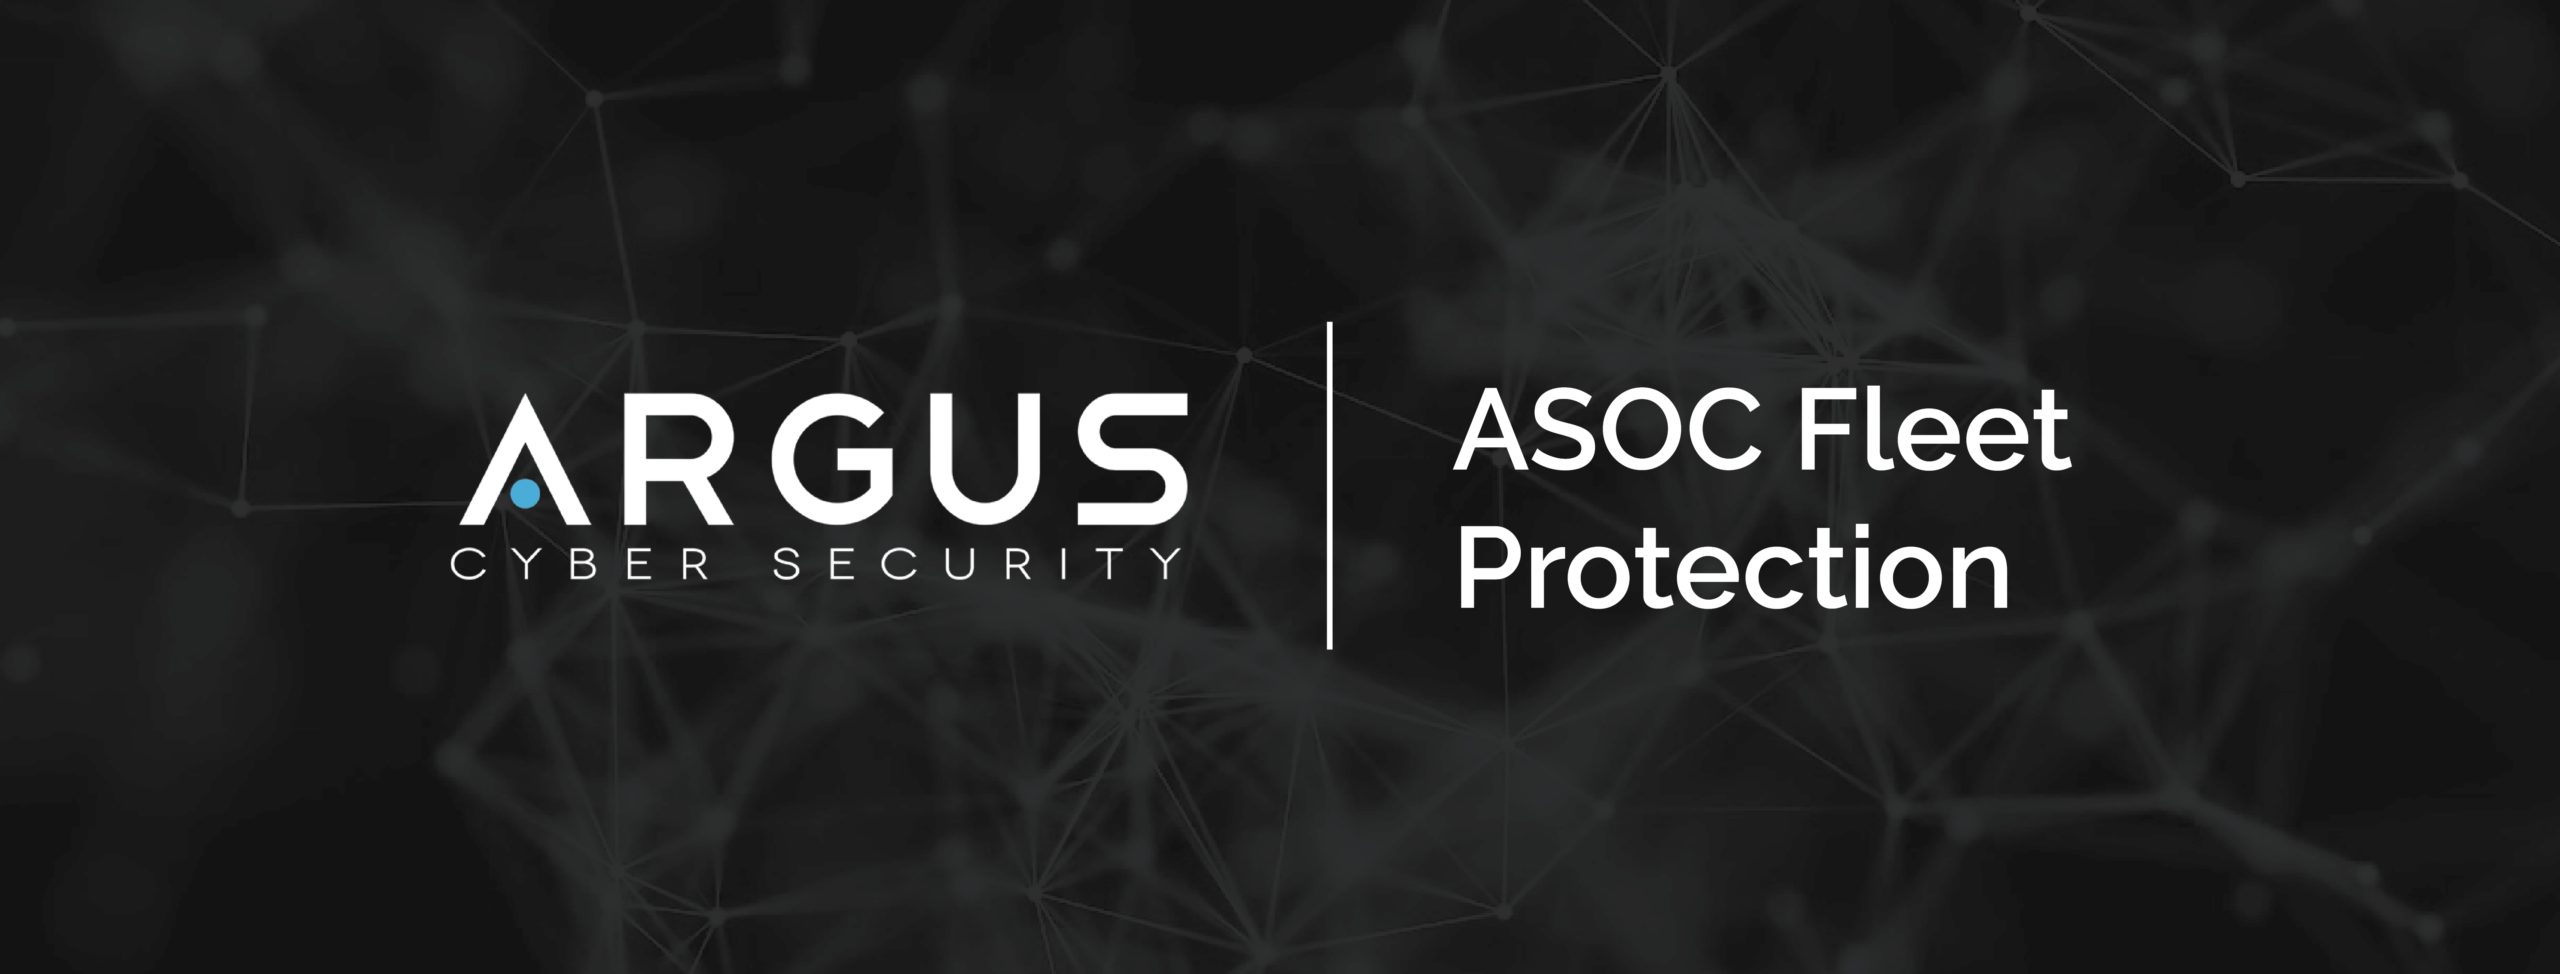 ASOC fleet protection argus cybersecurity